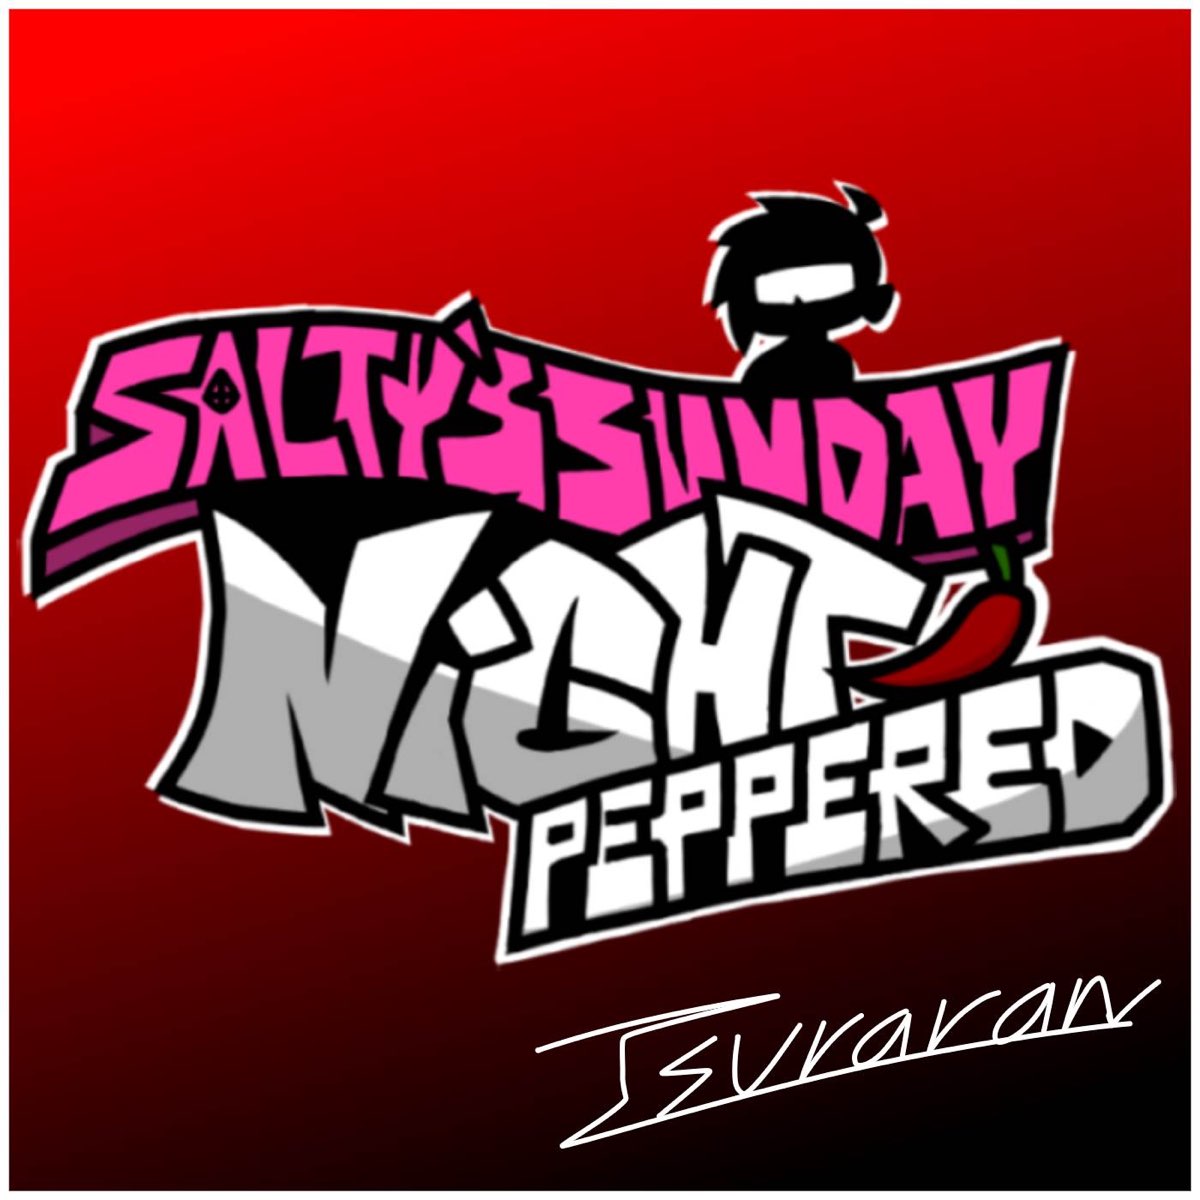 ‎Salty's Sunday Night: Peppered (Original Soundtrack) by Tsuraran on ...